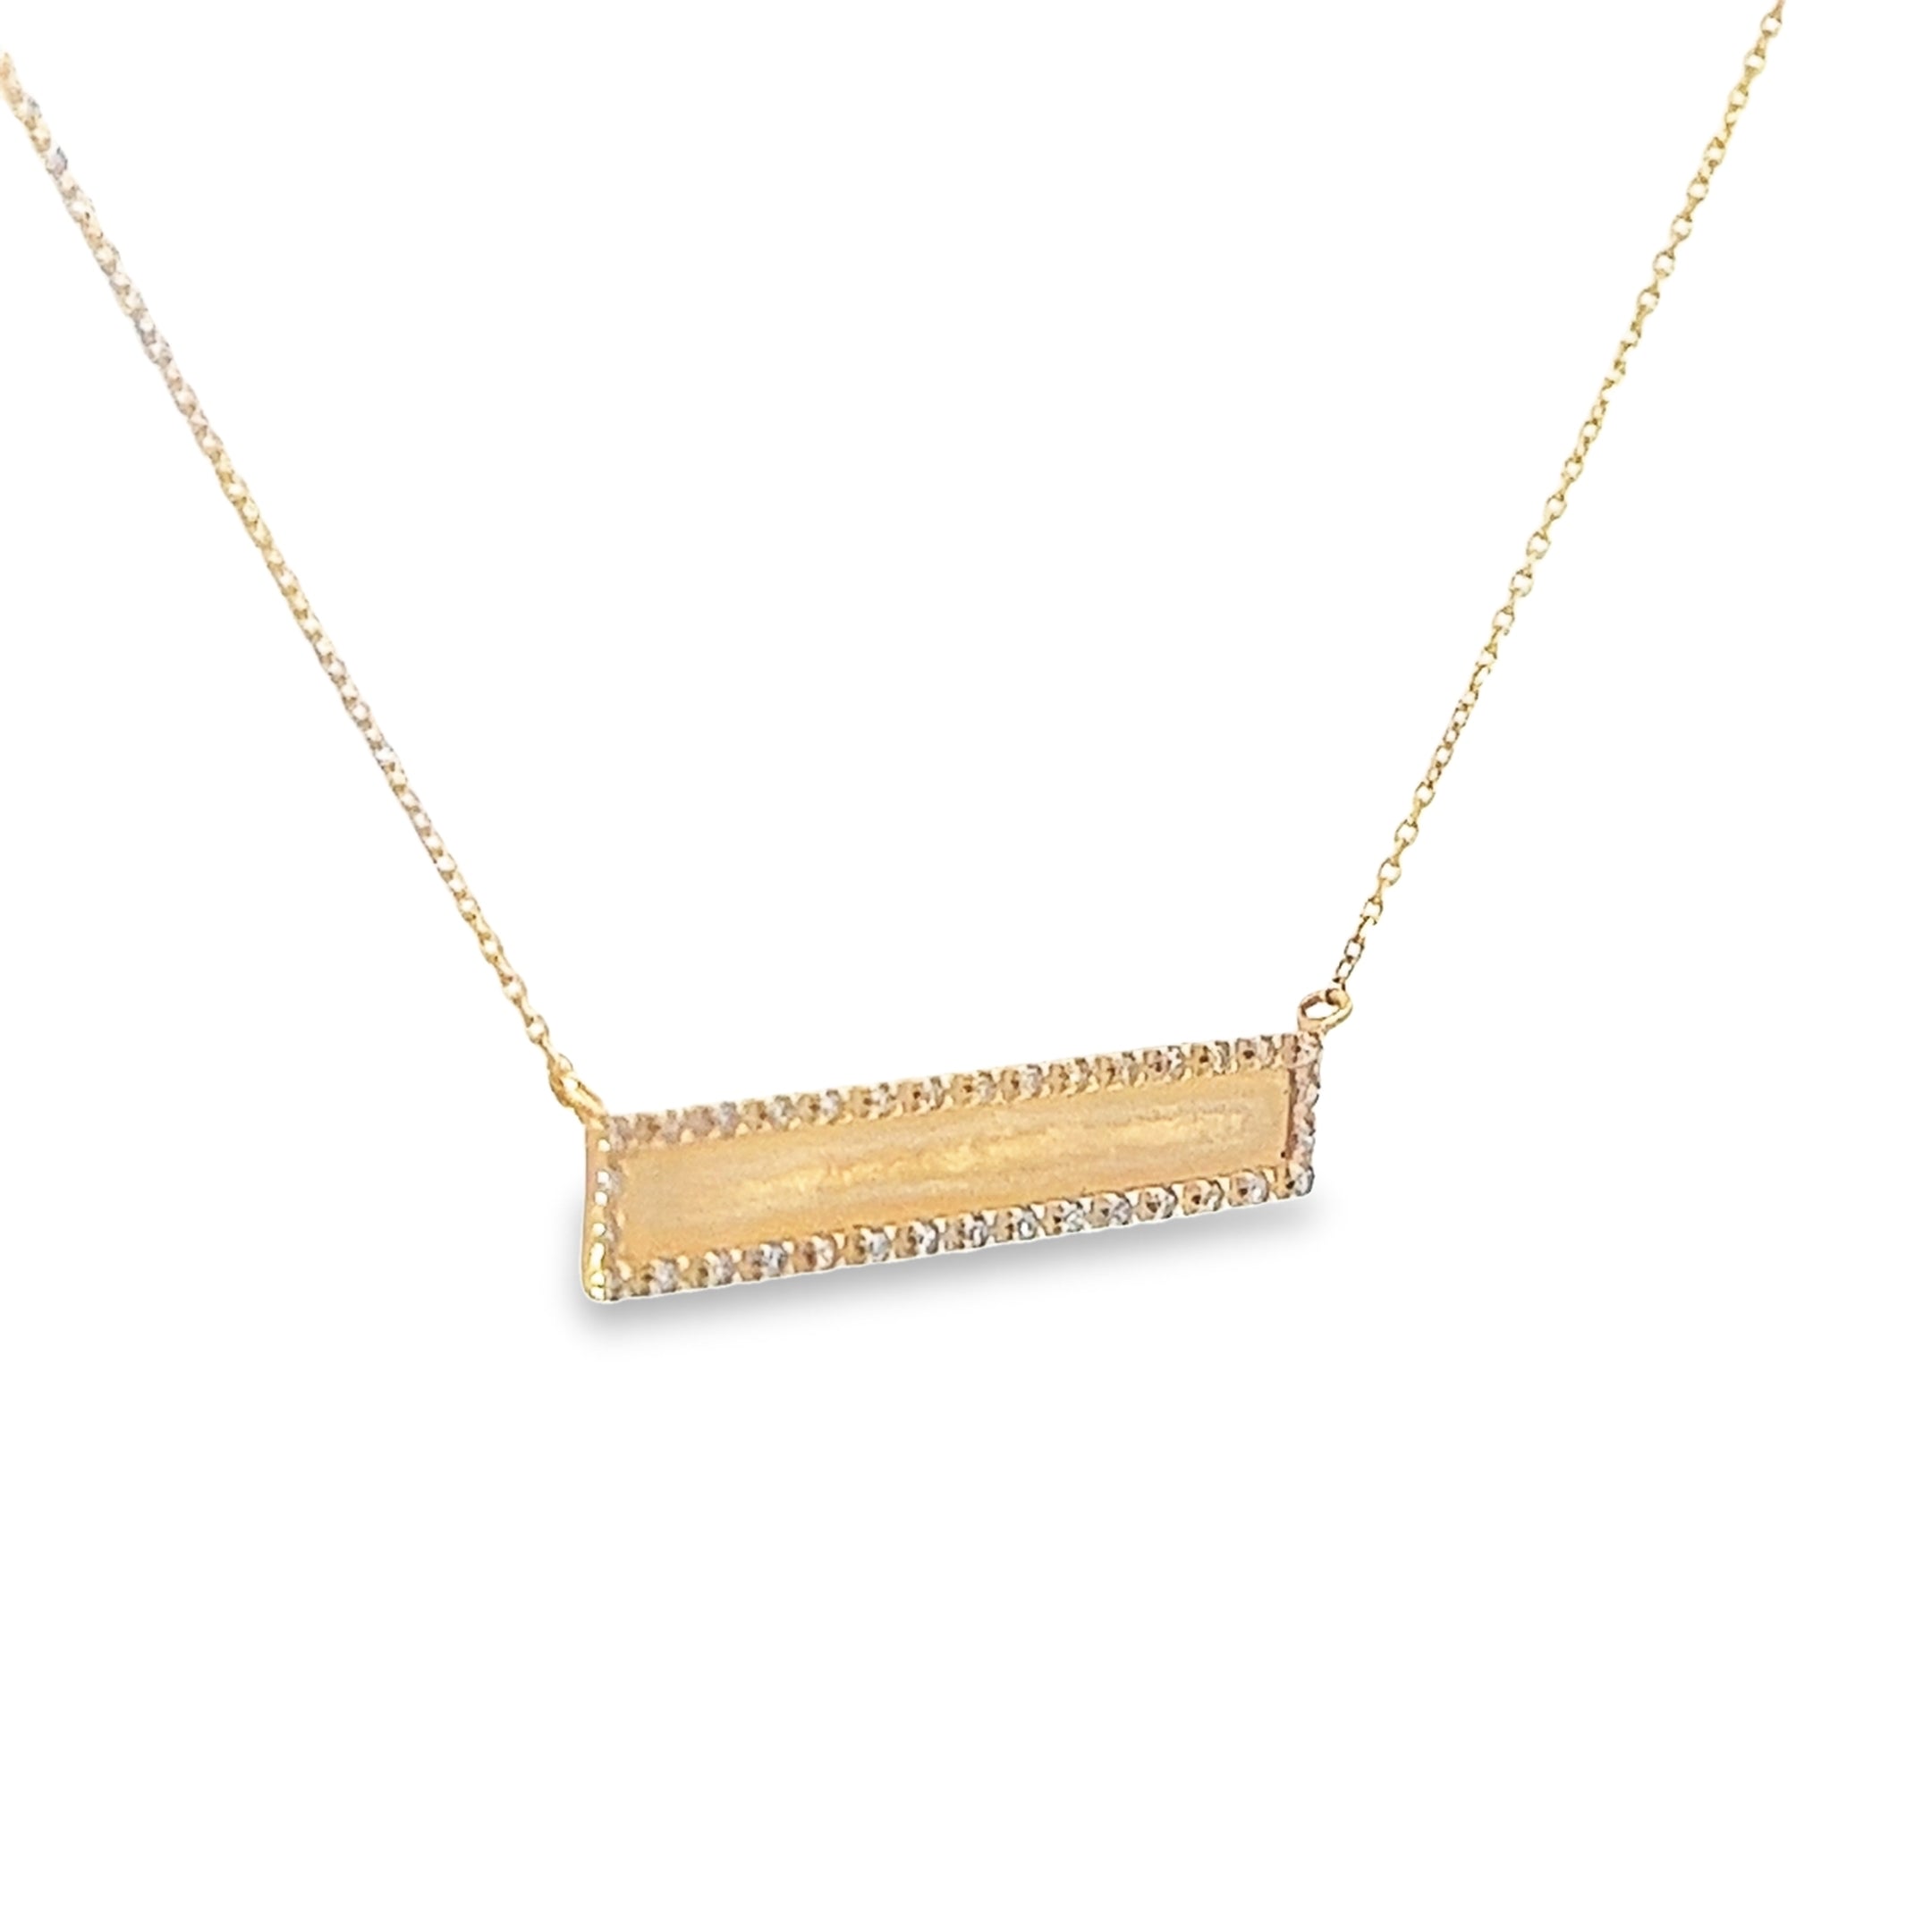 Ladies 14k yellow gold diamond Bar necklace